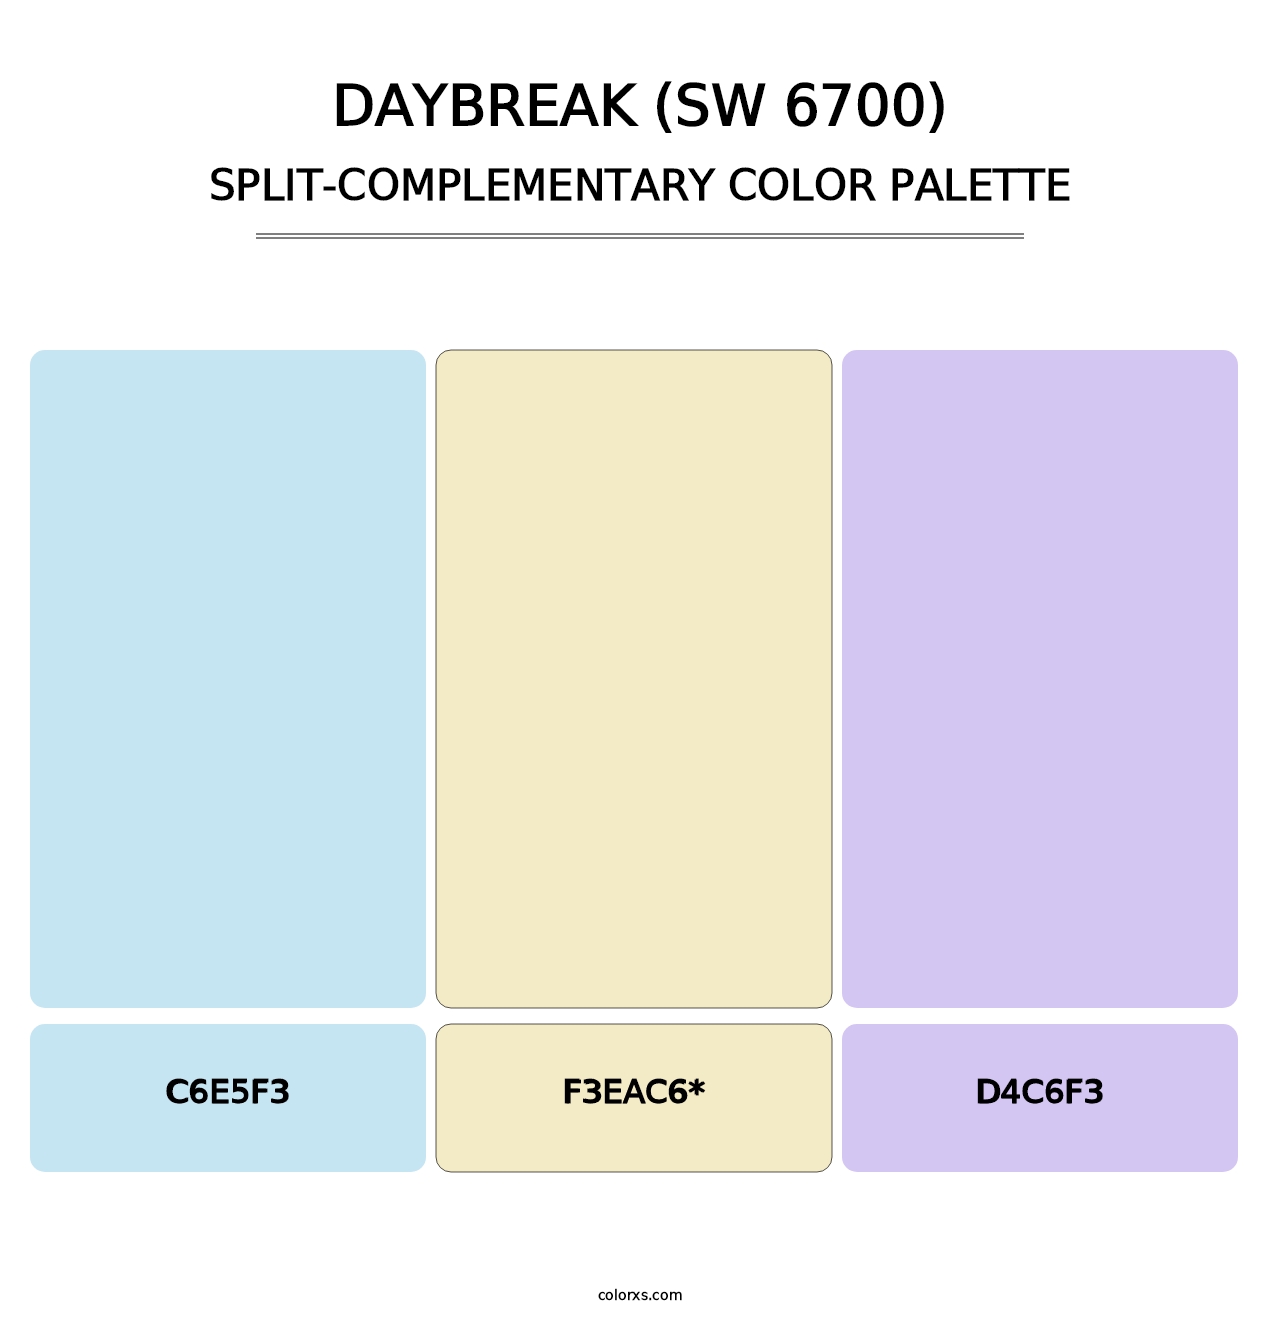 Daybreak (SW 6700) - Split-Complementary Color Palette